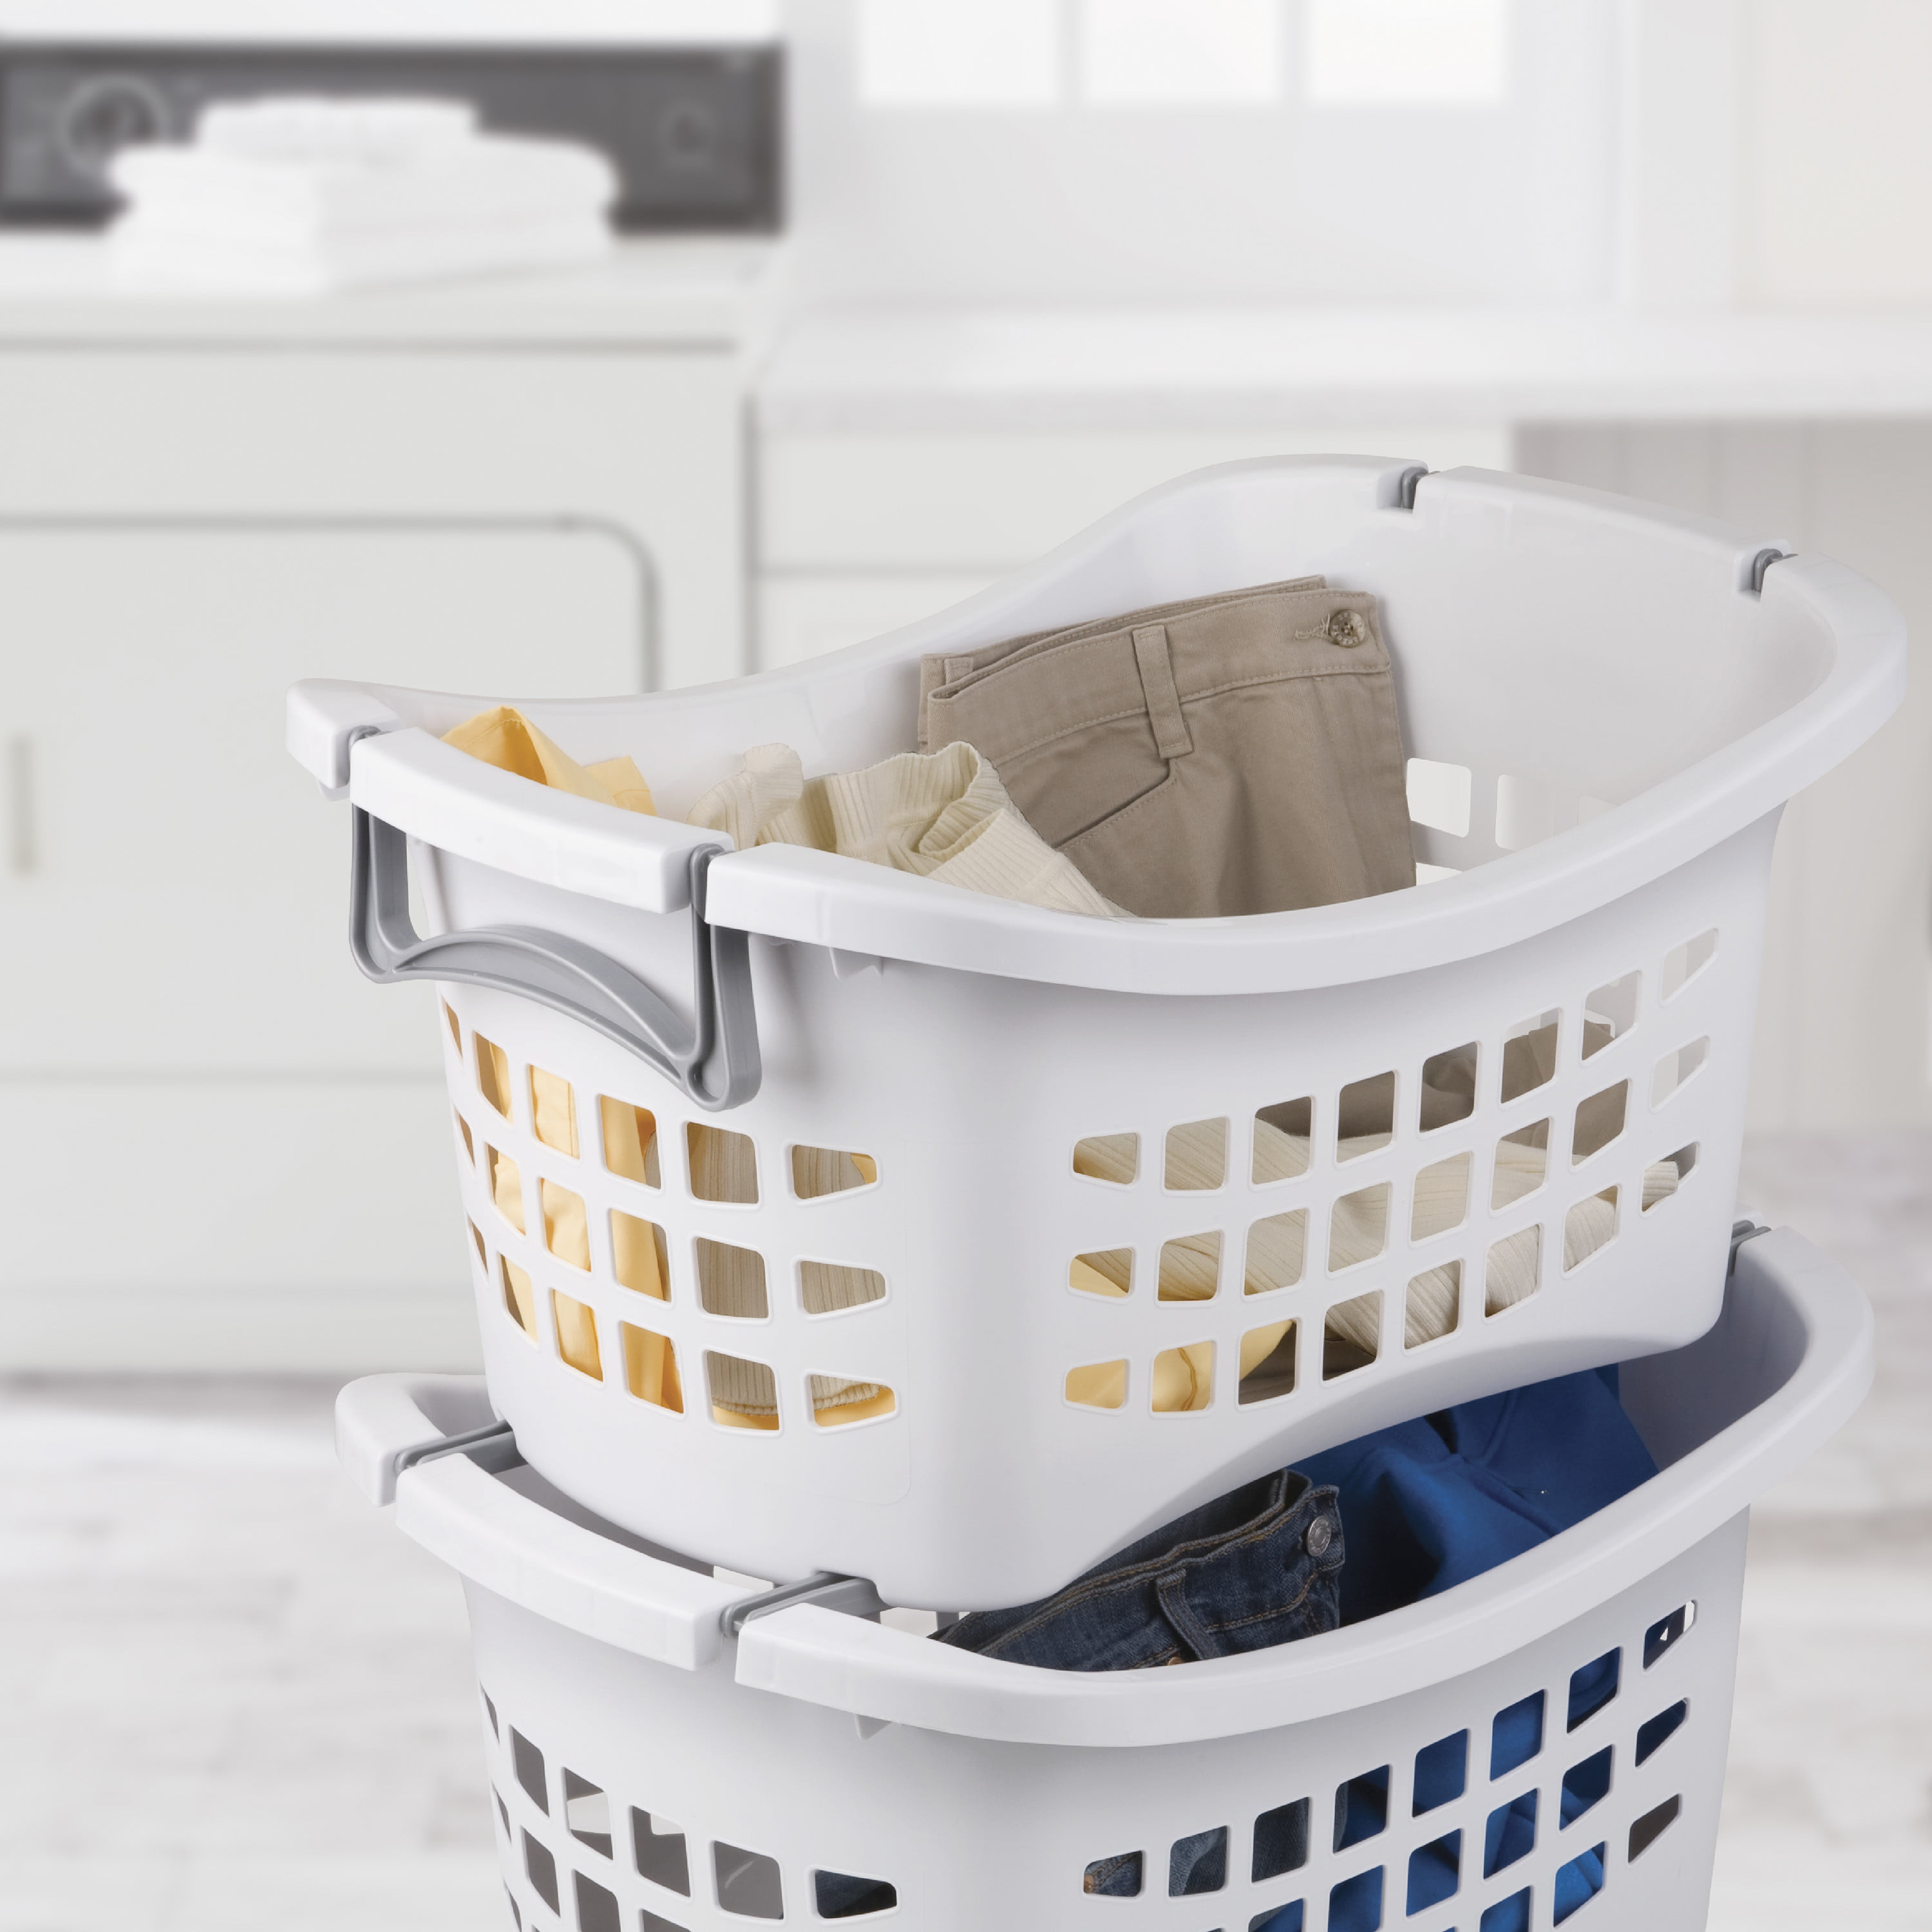 Details about   Set Of 6 Sterilite Sorting Hamper White Laundry Basket Storage & Organization 